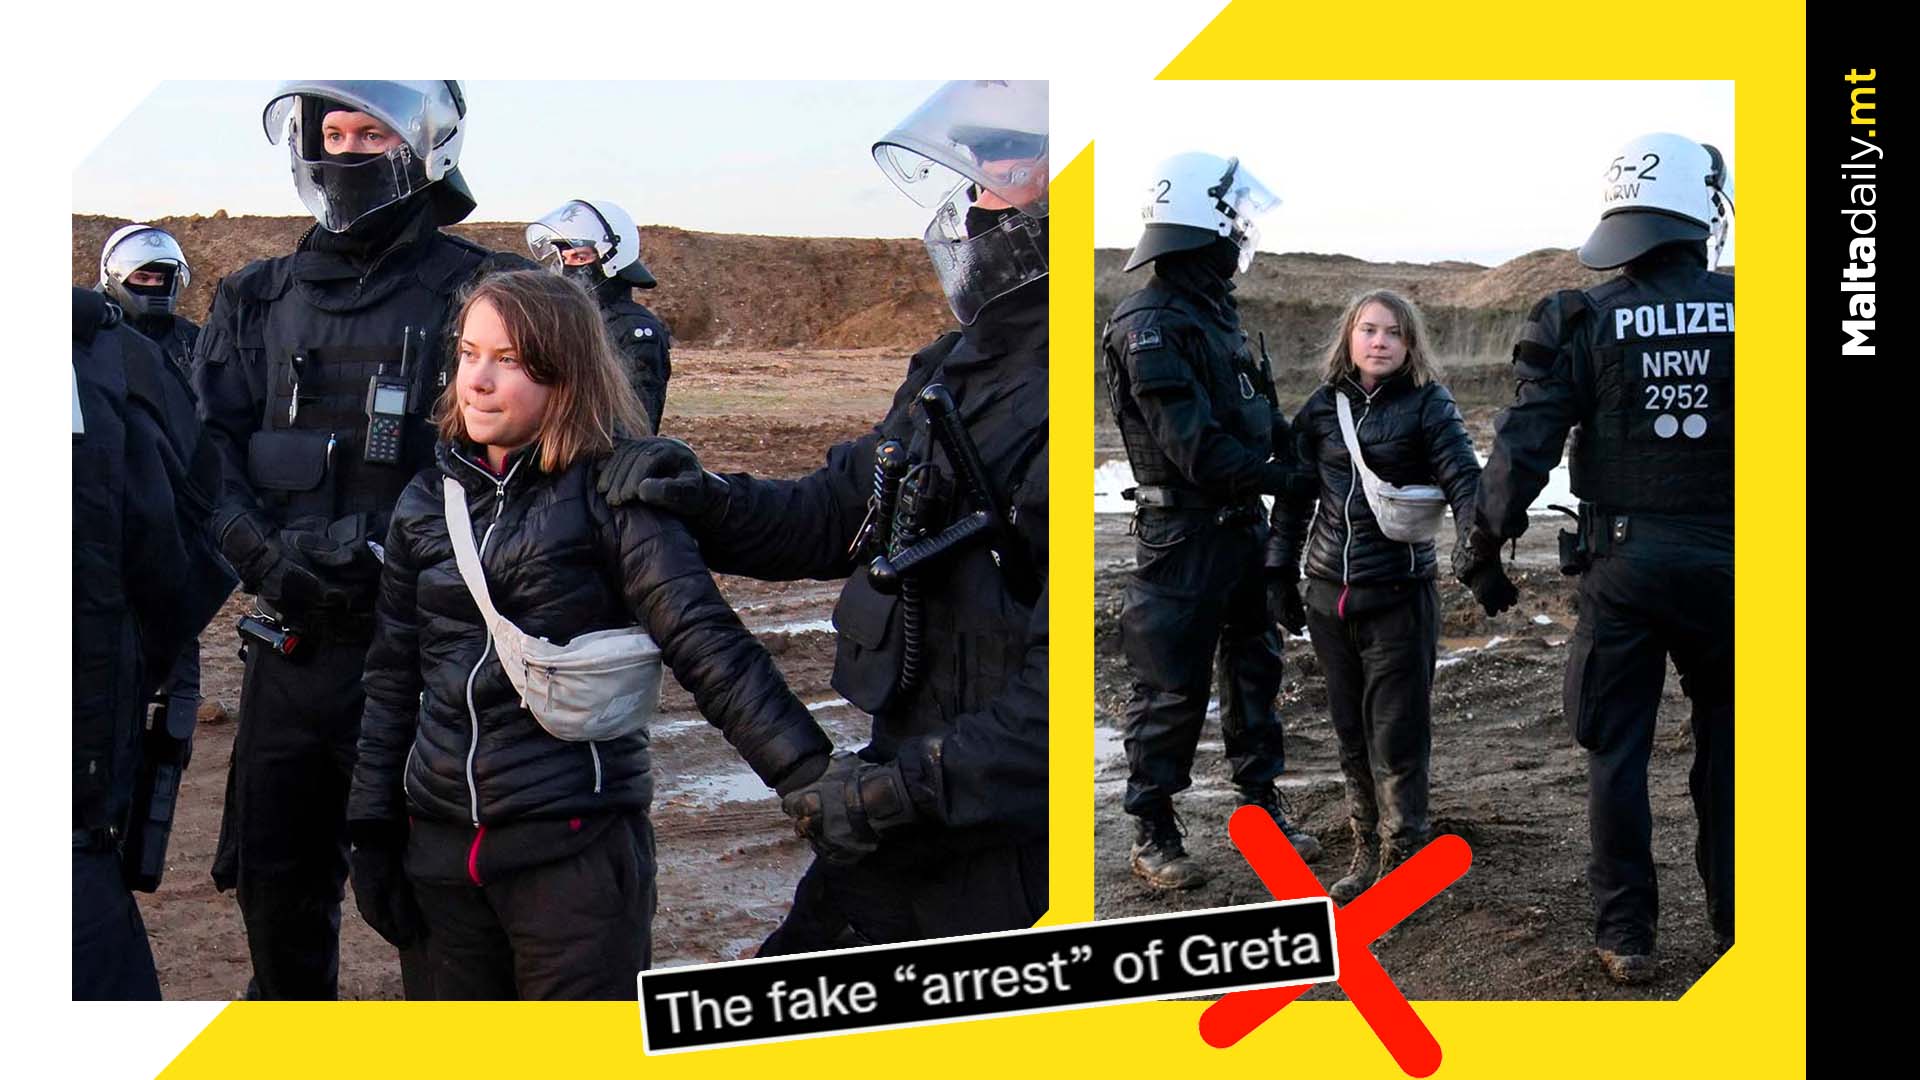 Police deny Greta Thunberg’s arrest was staged after disinformation